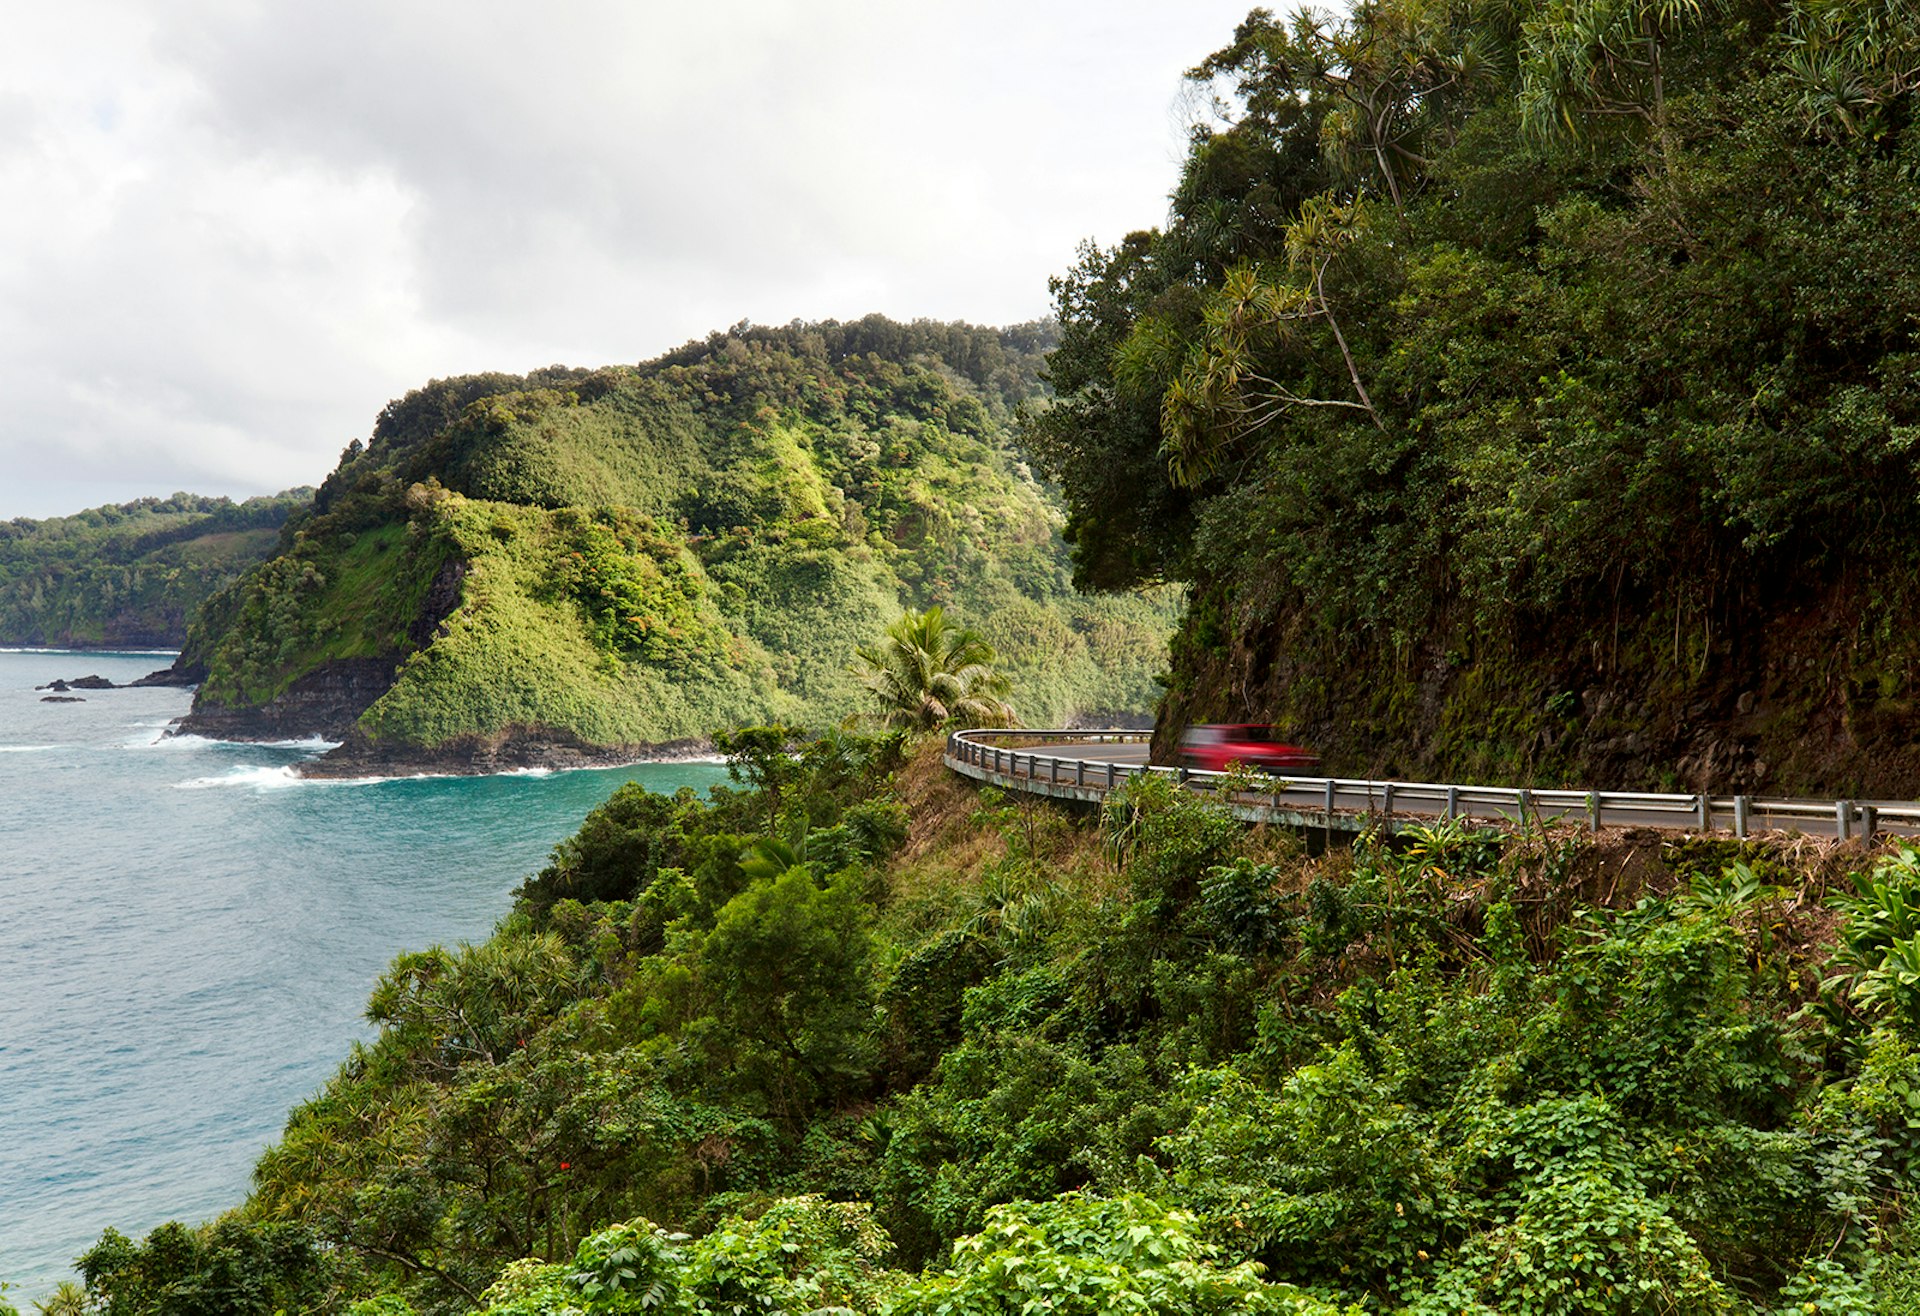 A car drives along a coastal road lined in tropical vegetation; maui